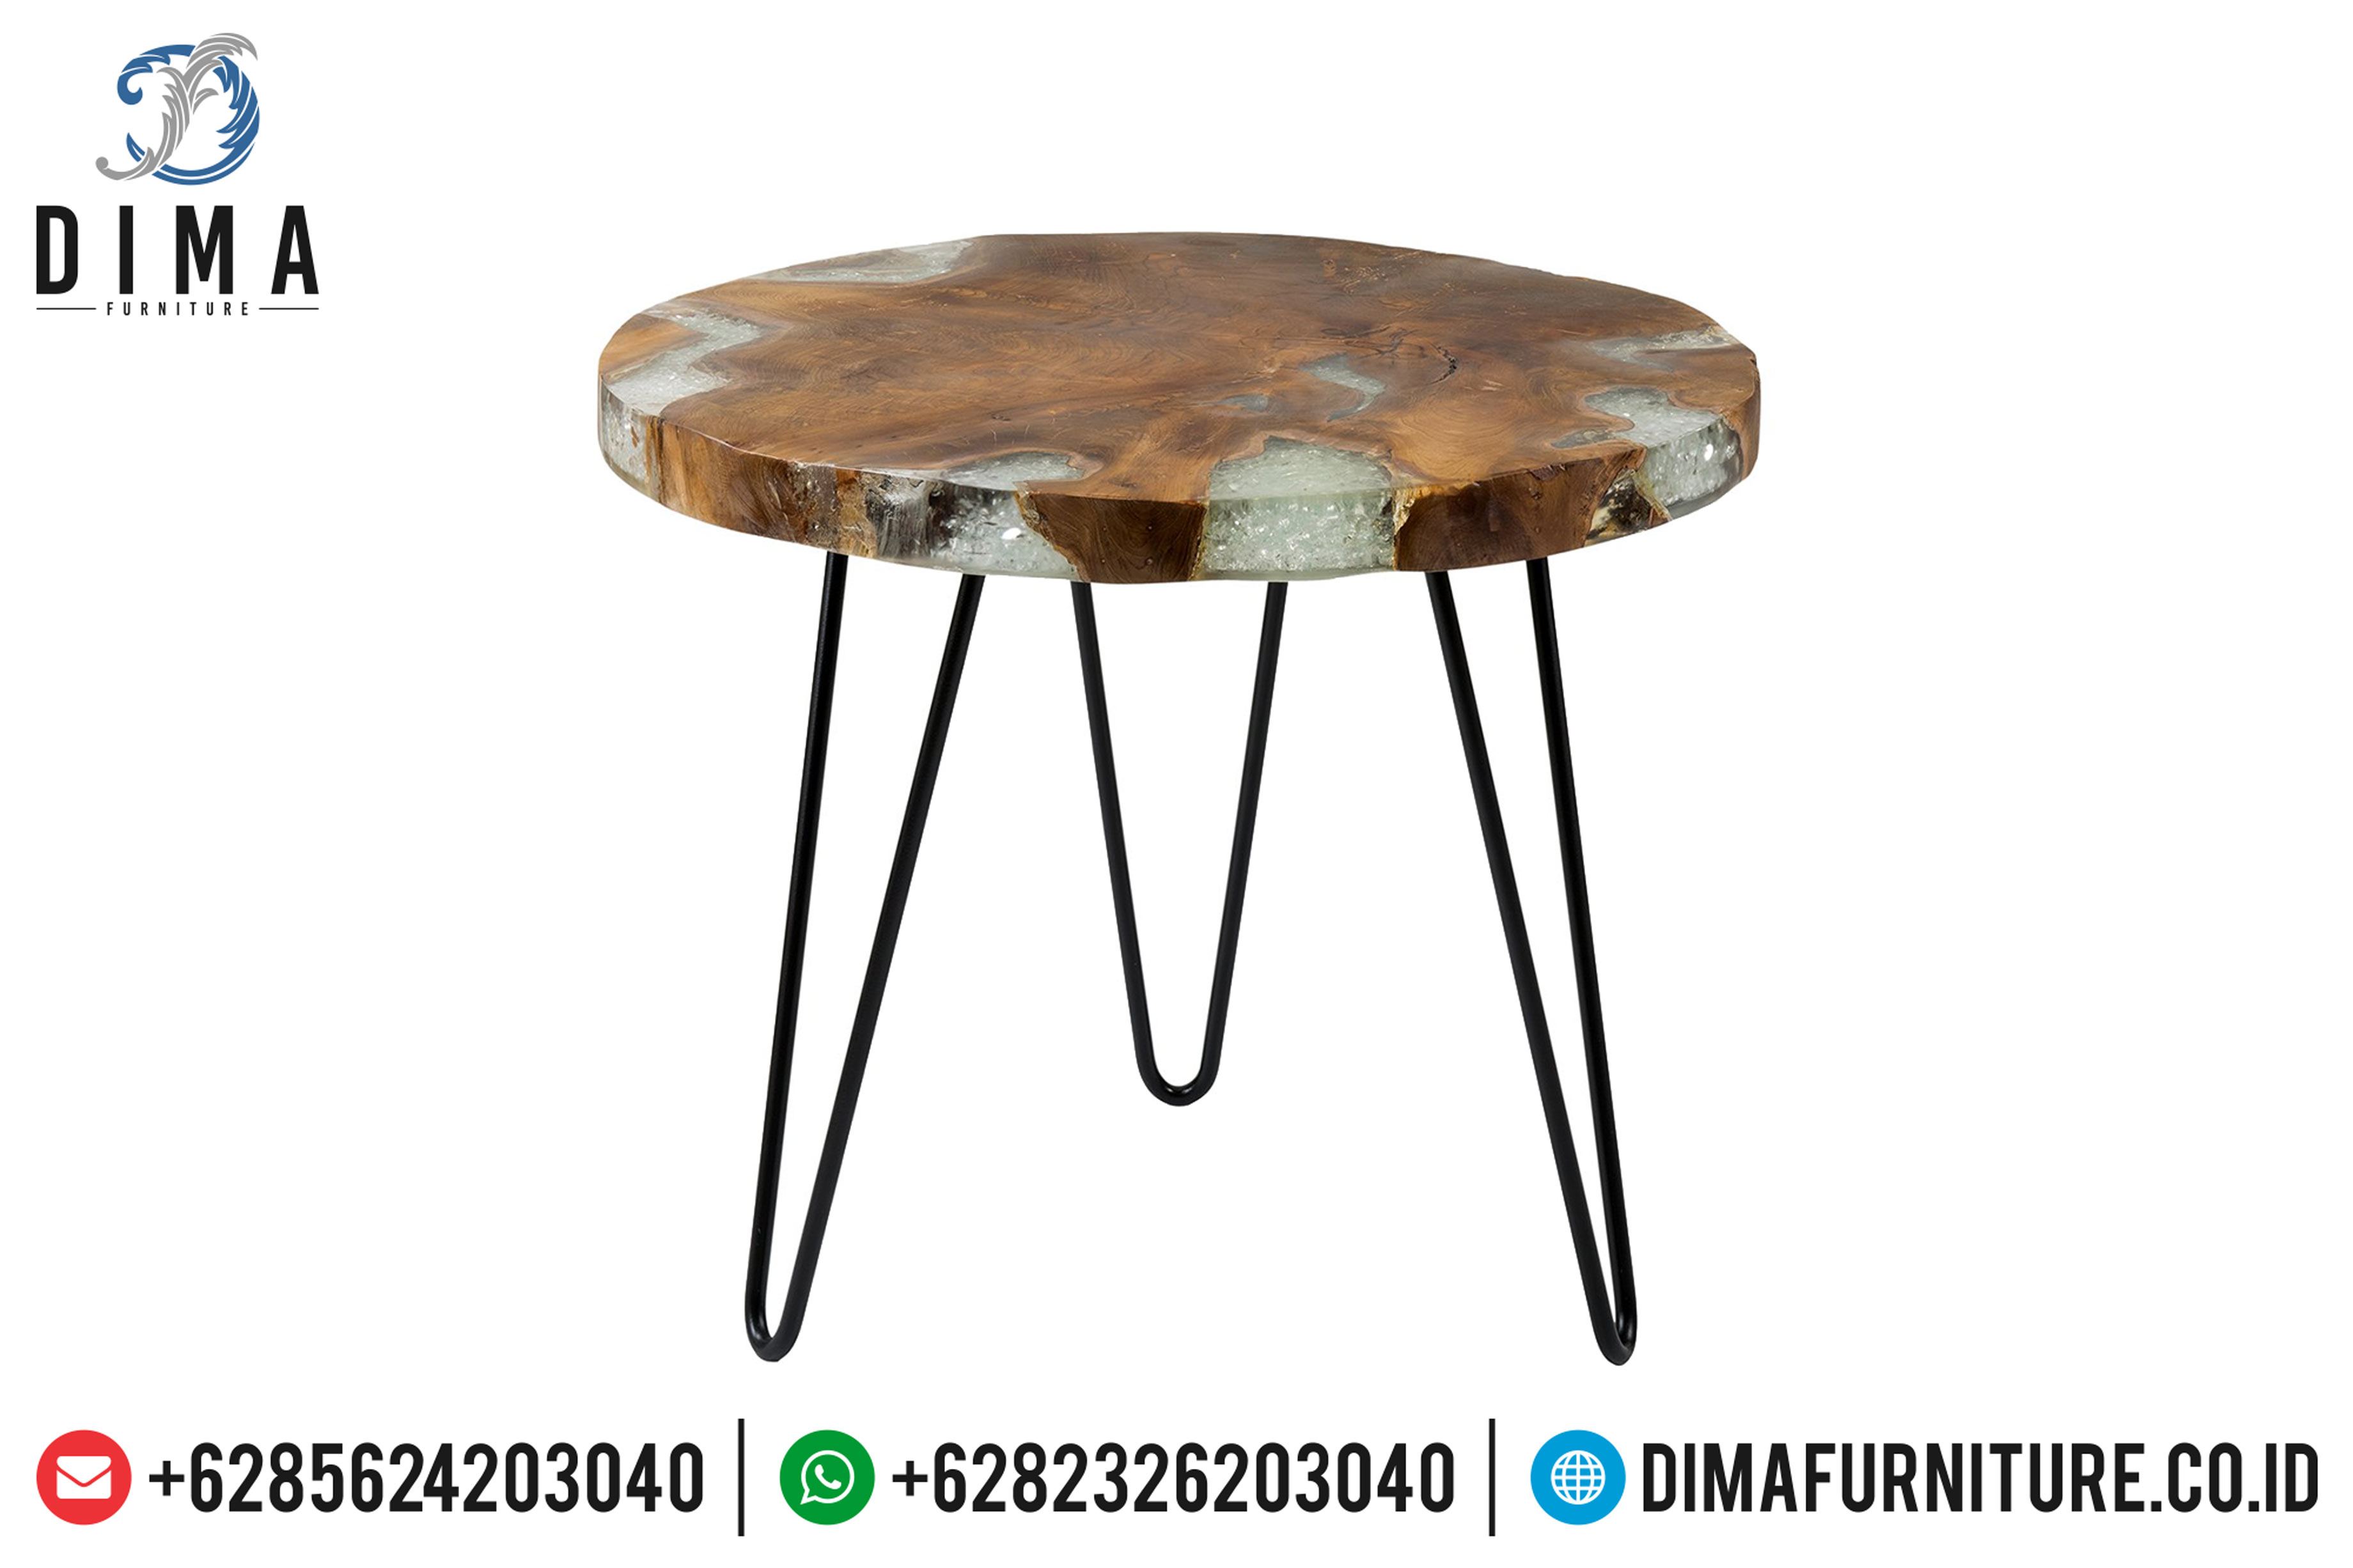 Industrial Furniture Indonesia, Resin Furniture, Meja Resin Minimalis DF-0703